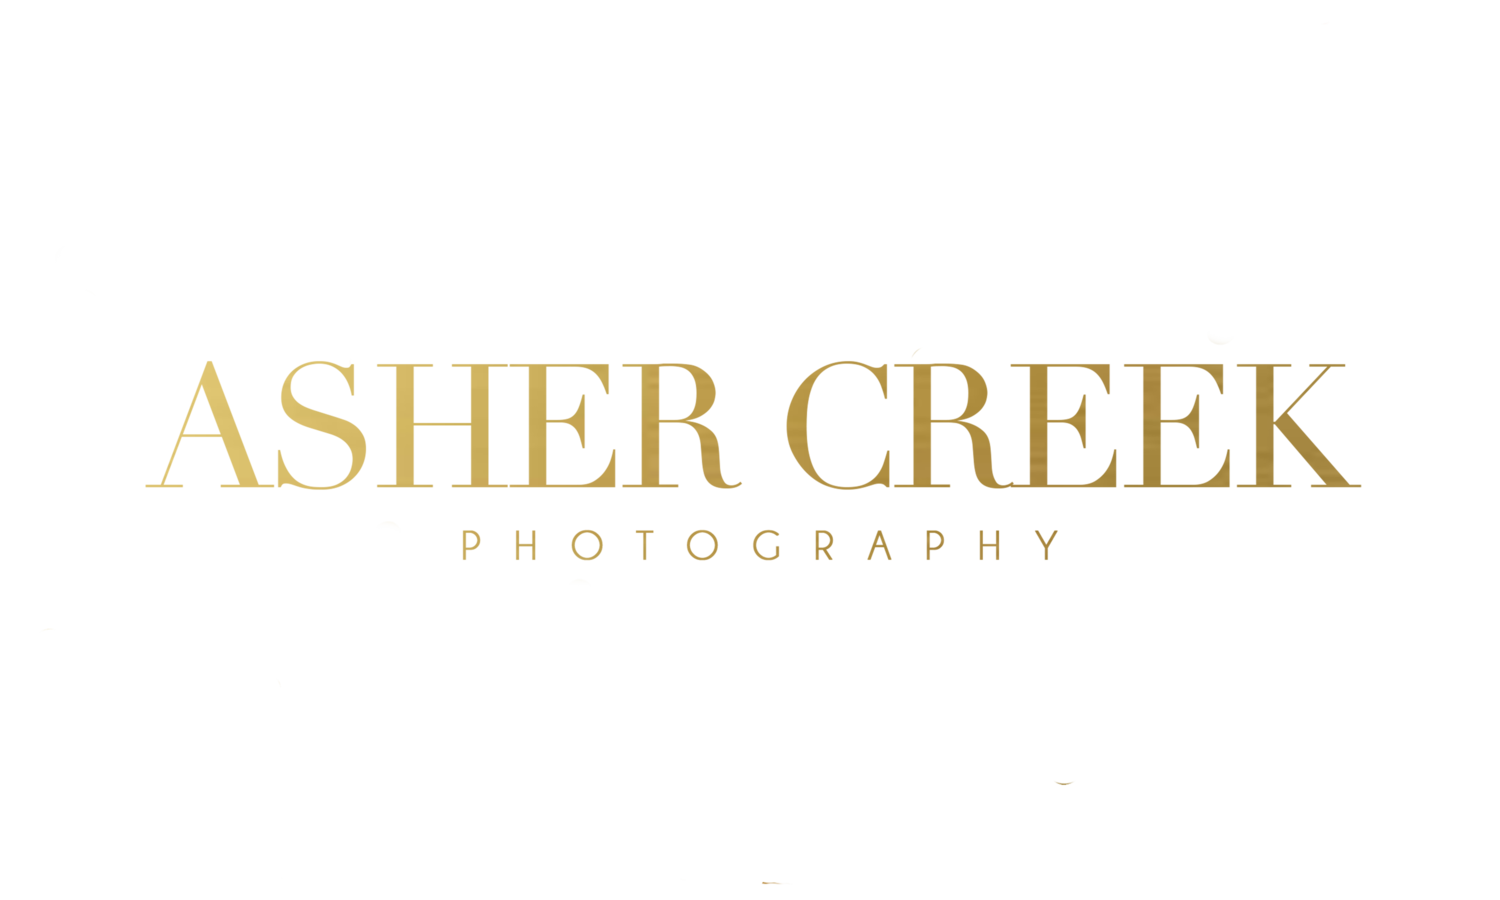 Asher Creek